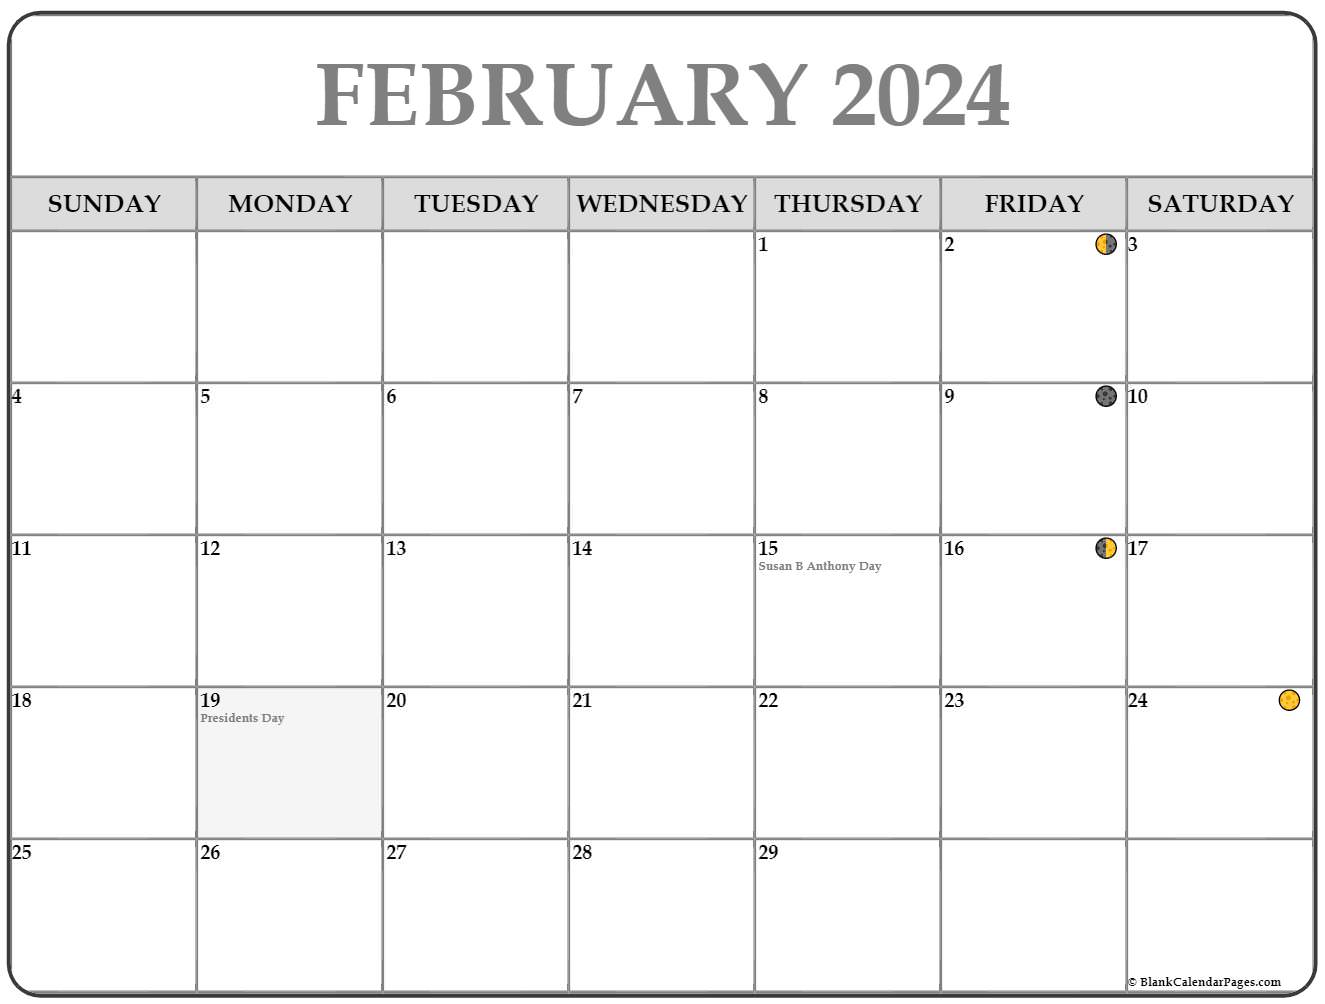 February 2020 calendar | free printable monthly calendars